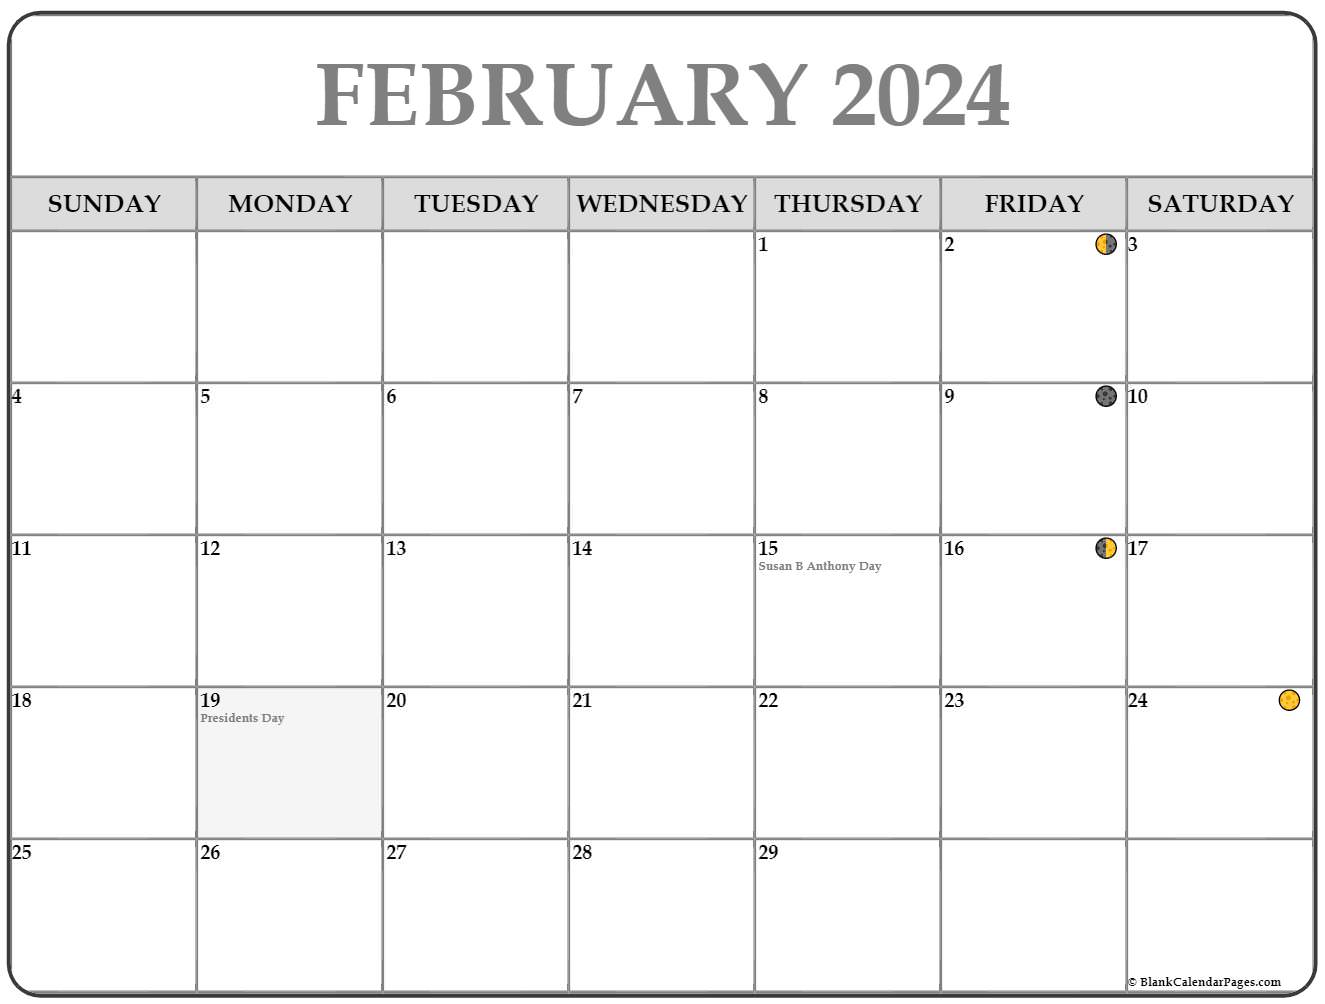 February 2020 calendar | free printable monthly calendars